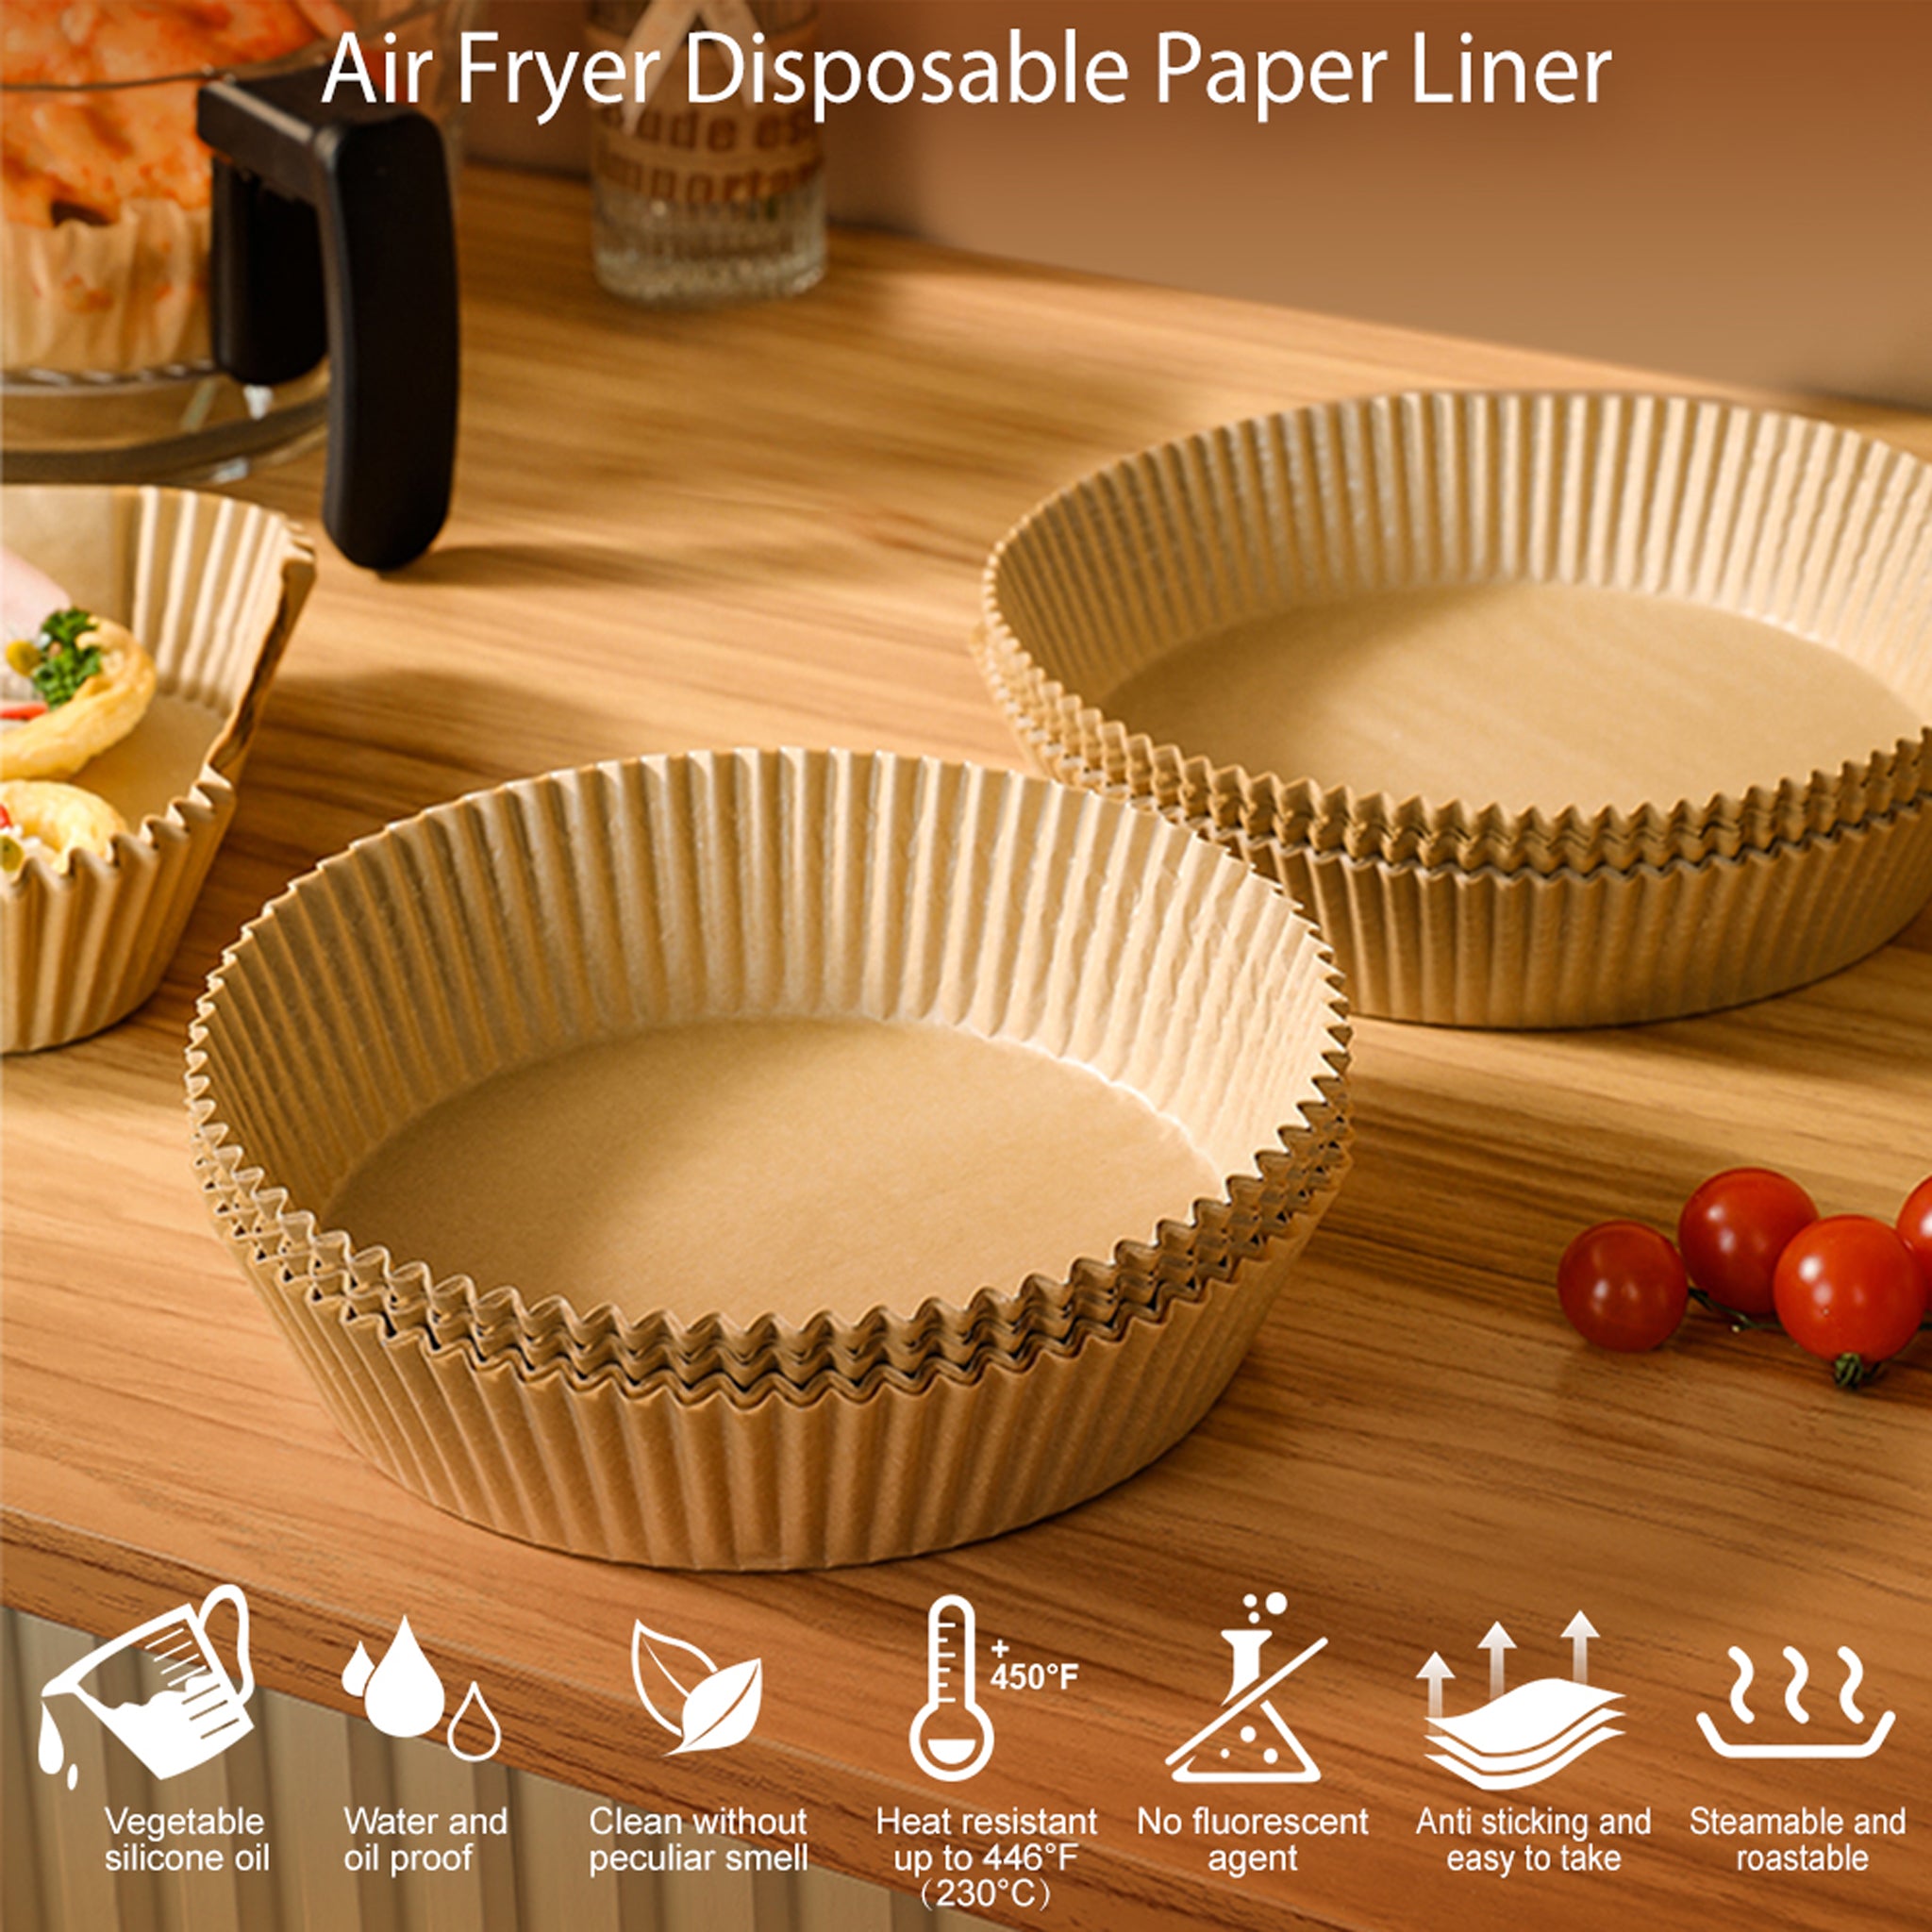 SALTNLIGHT Air Fryer Disposable Paper Liner & Reviews